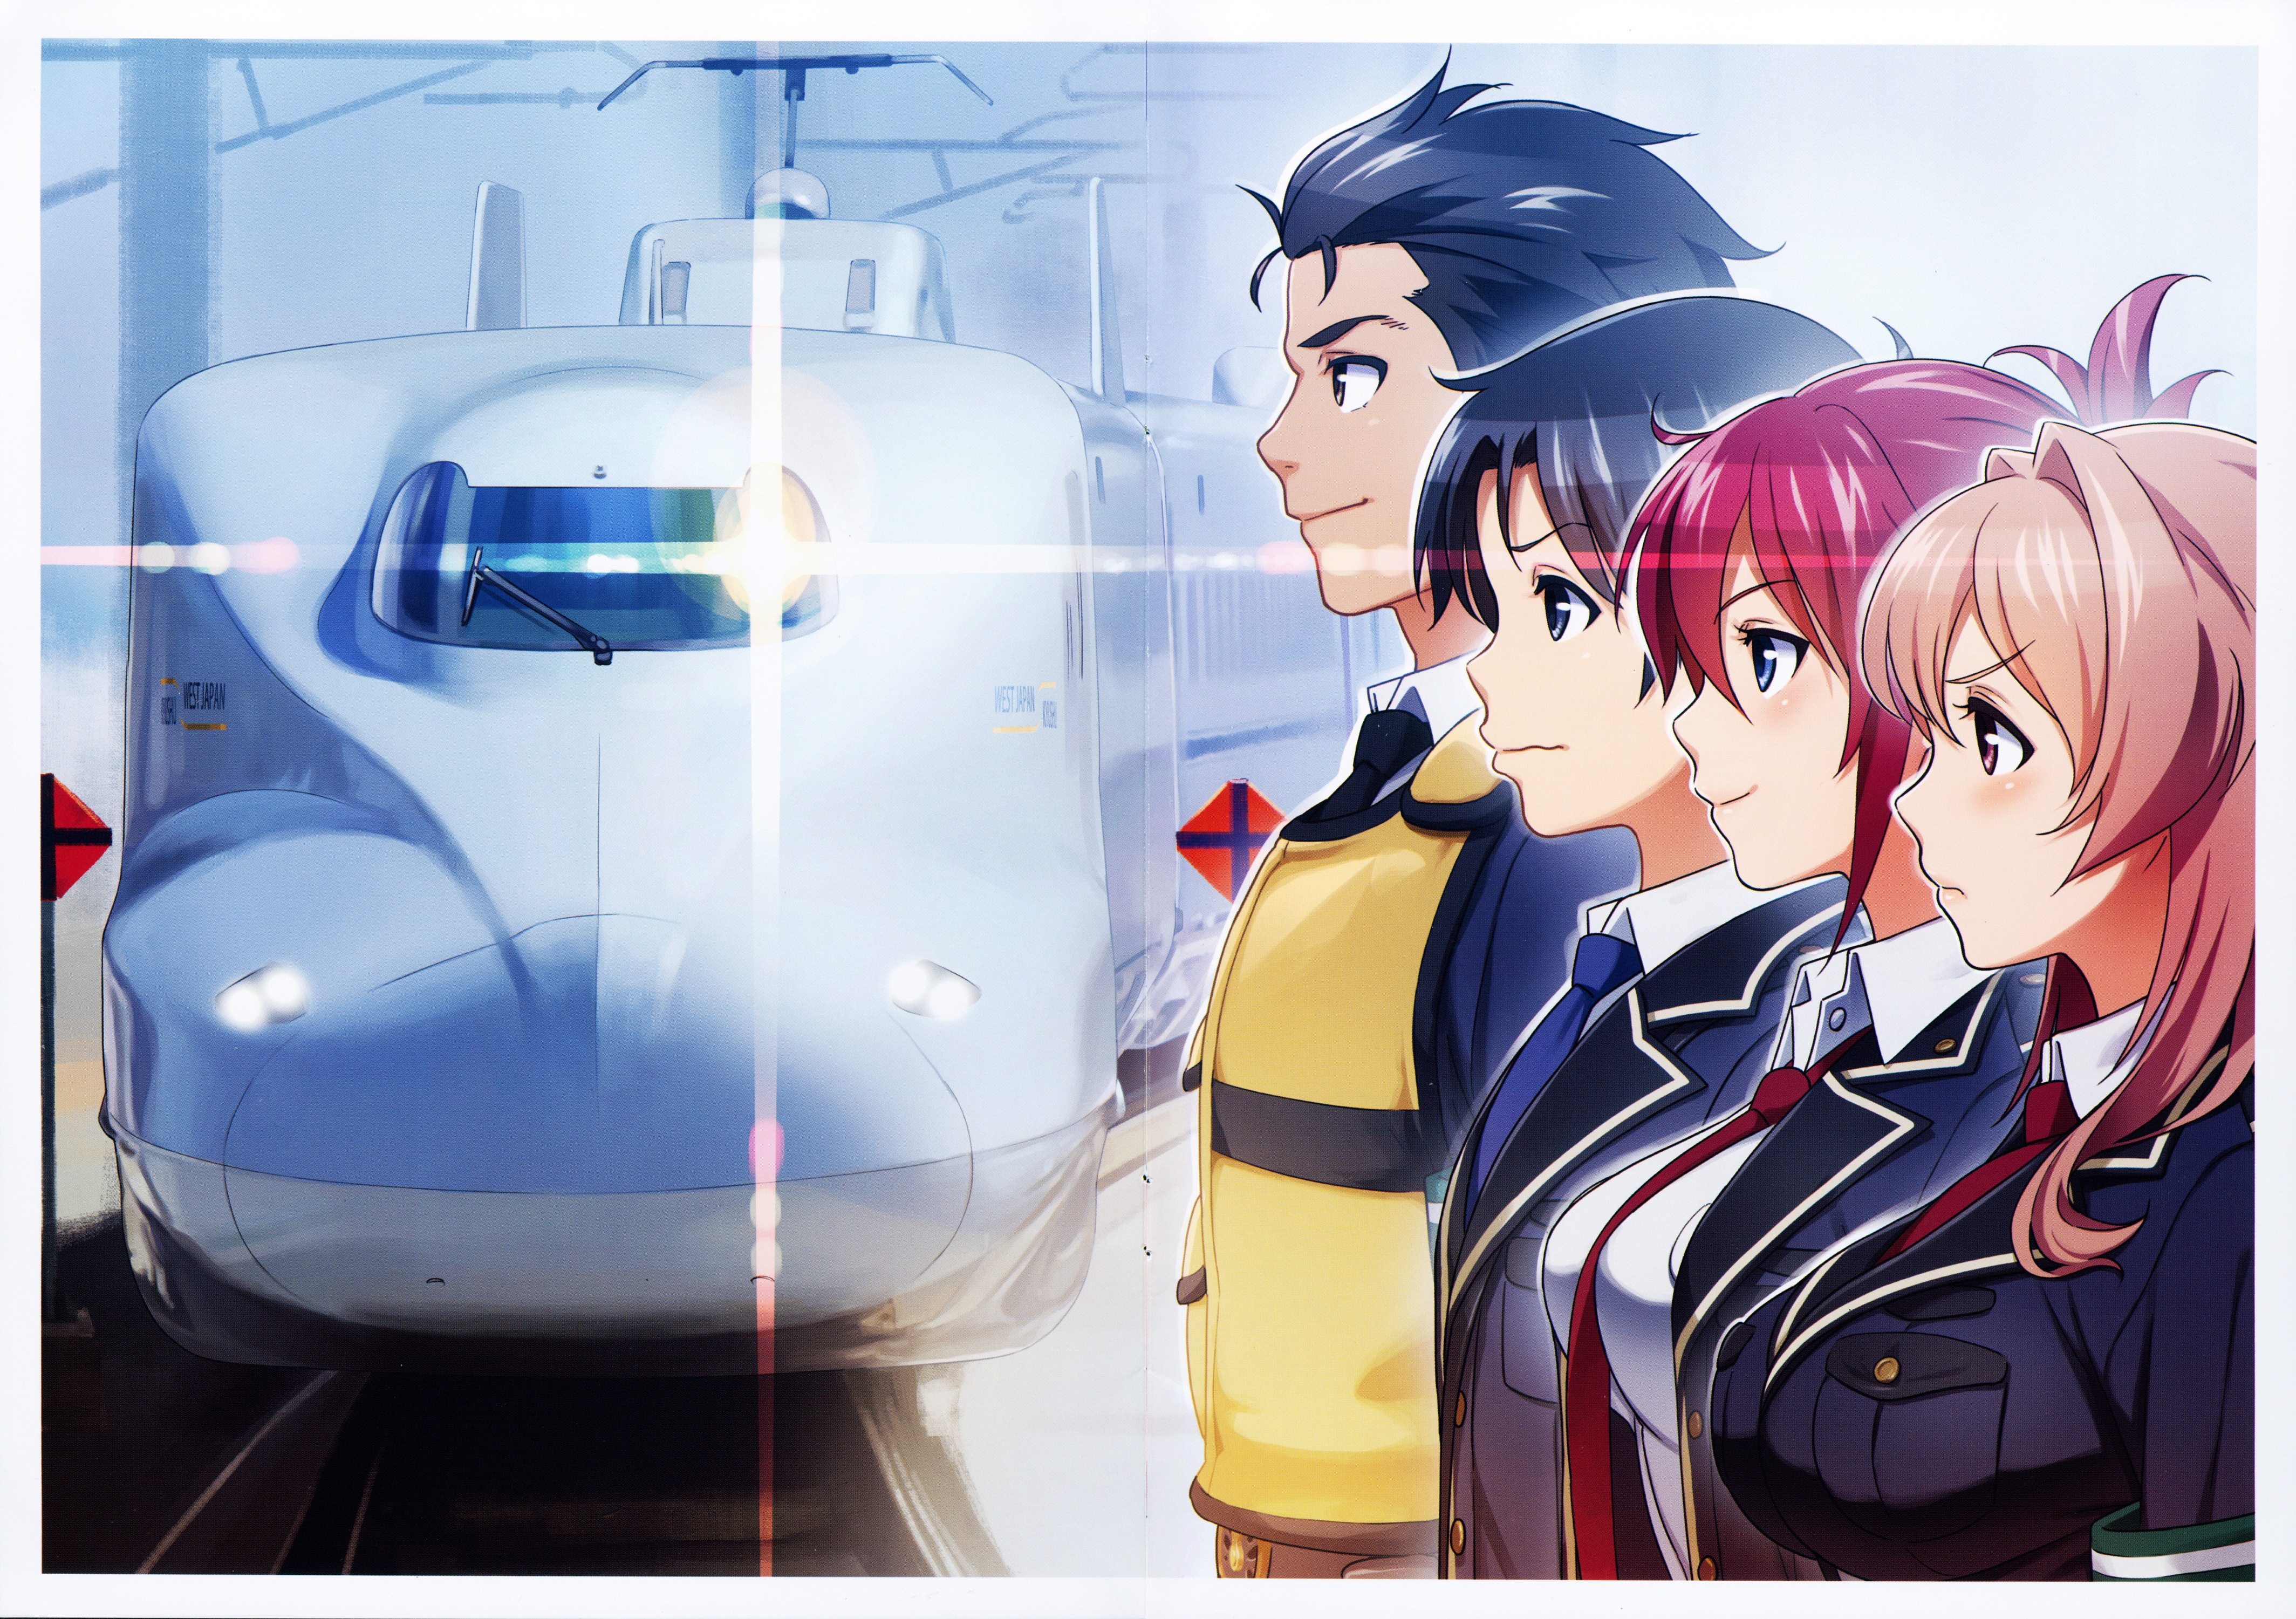 Anime Rail Wars! 4k Ultra HD Wallpaper by Vania600